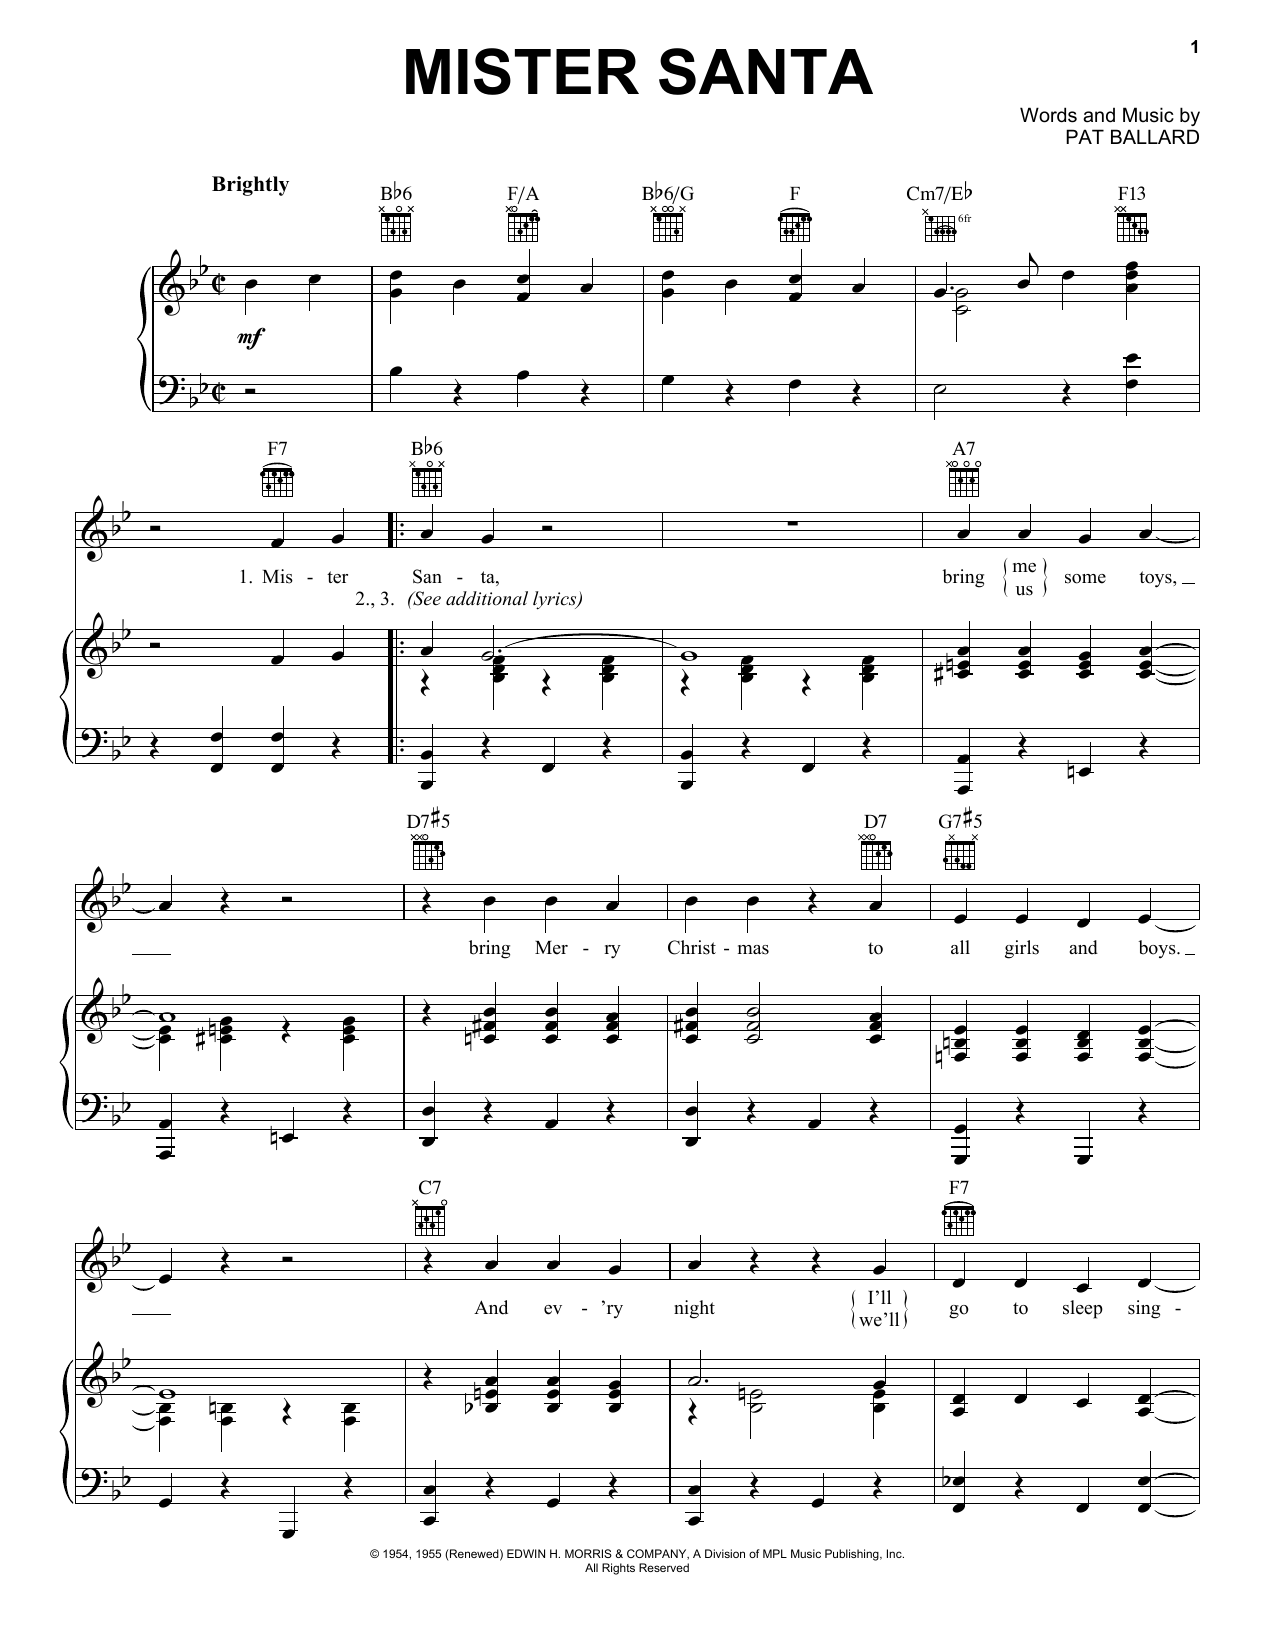 Pat Ballard Mister Santa Sheet Music Notes & Chords for Lyrics & Chords - Download or Print PDF